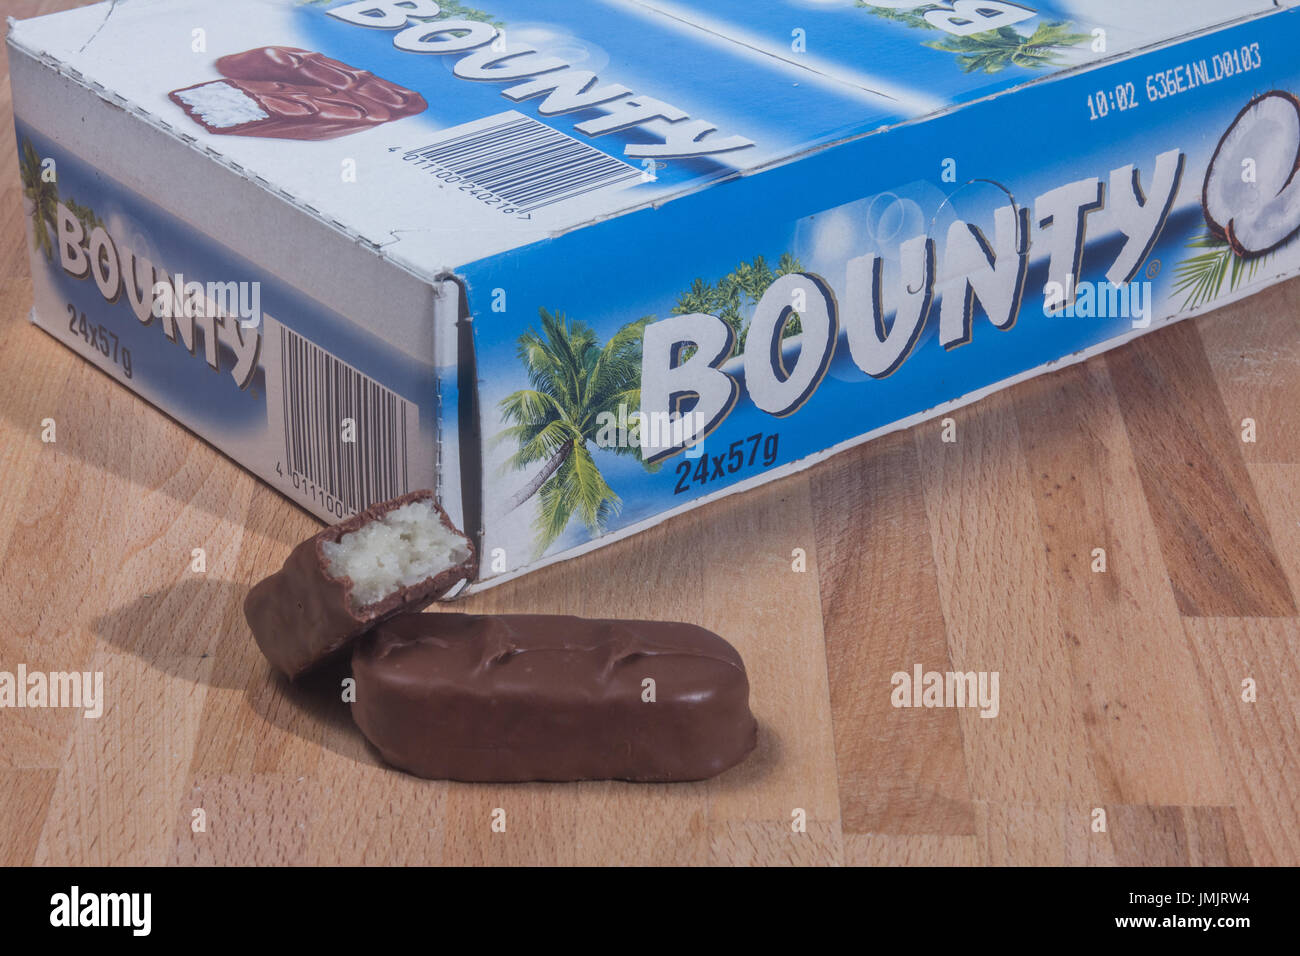 Bounty coconut chocolate bars Stock Photo